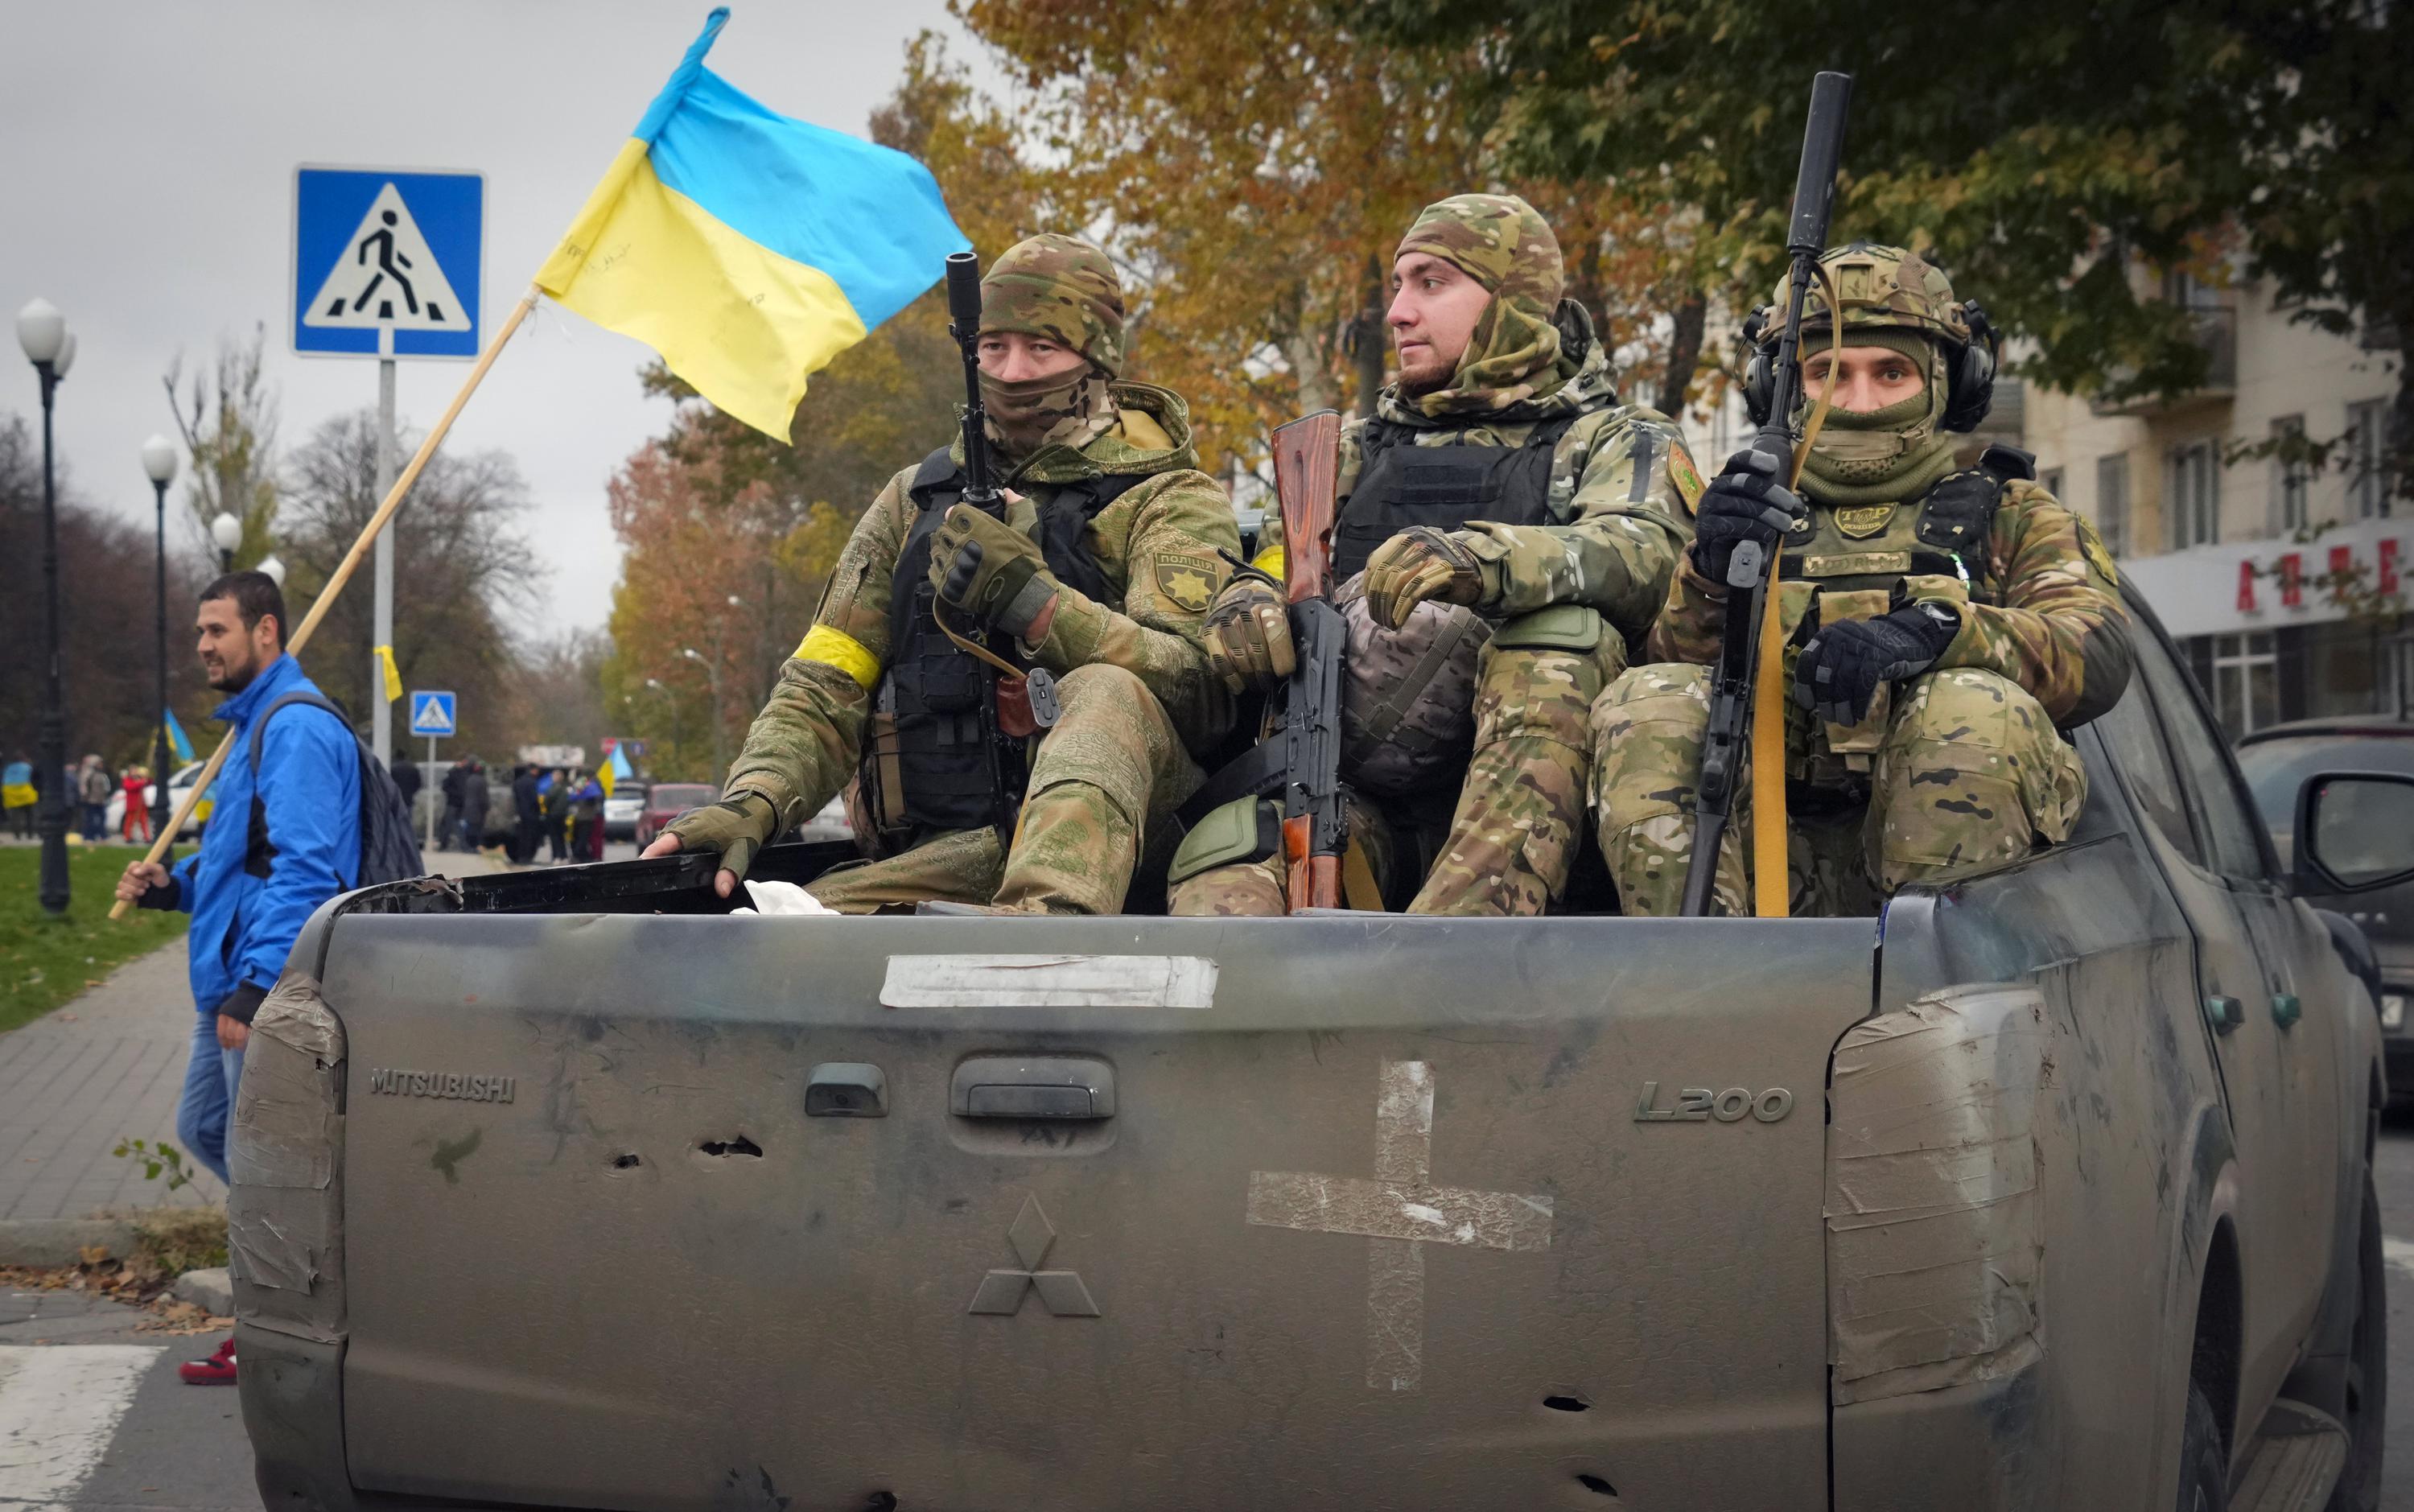 Ukraine president accuses Russia of 'atrocities' in Kherson